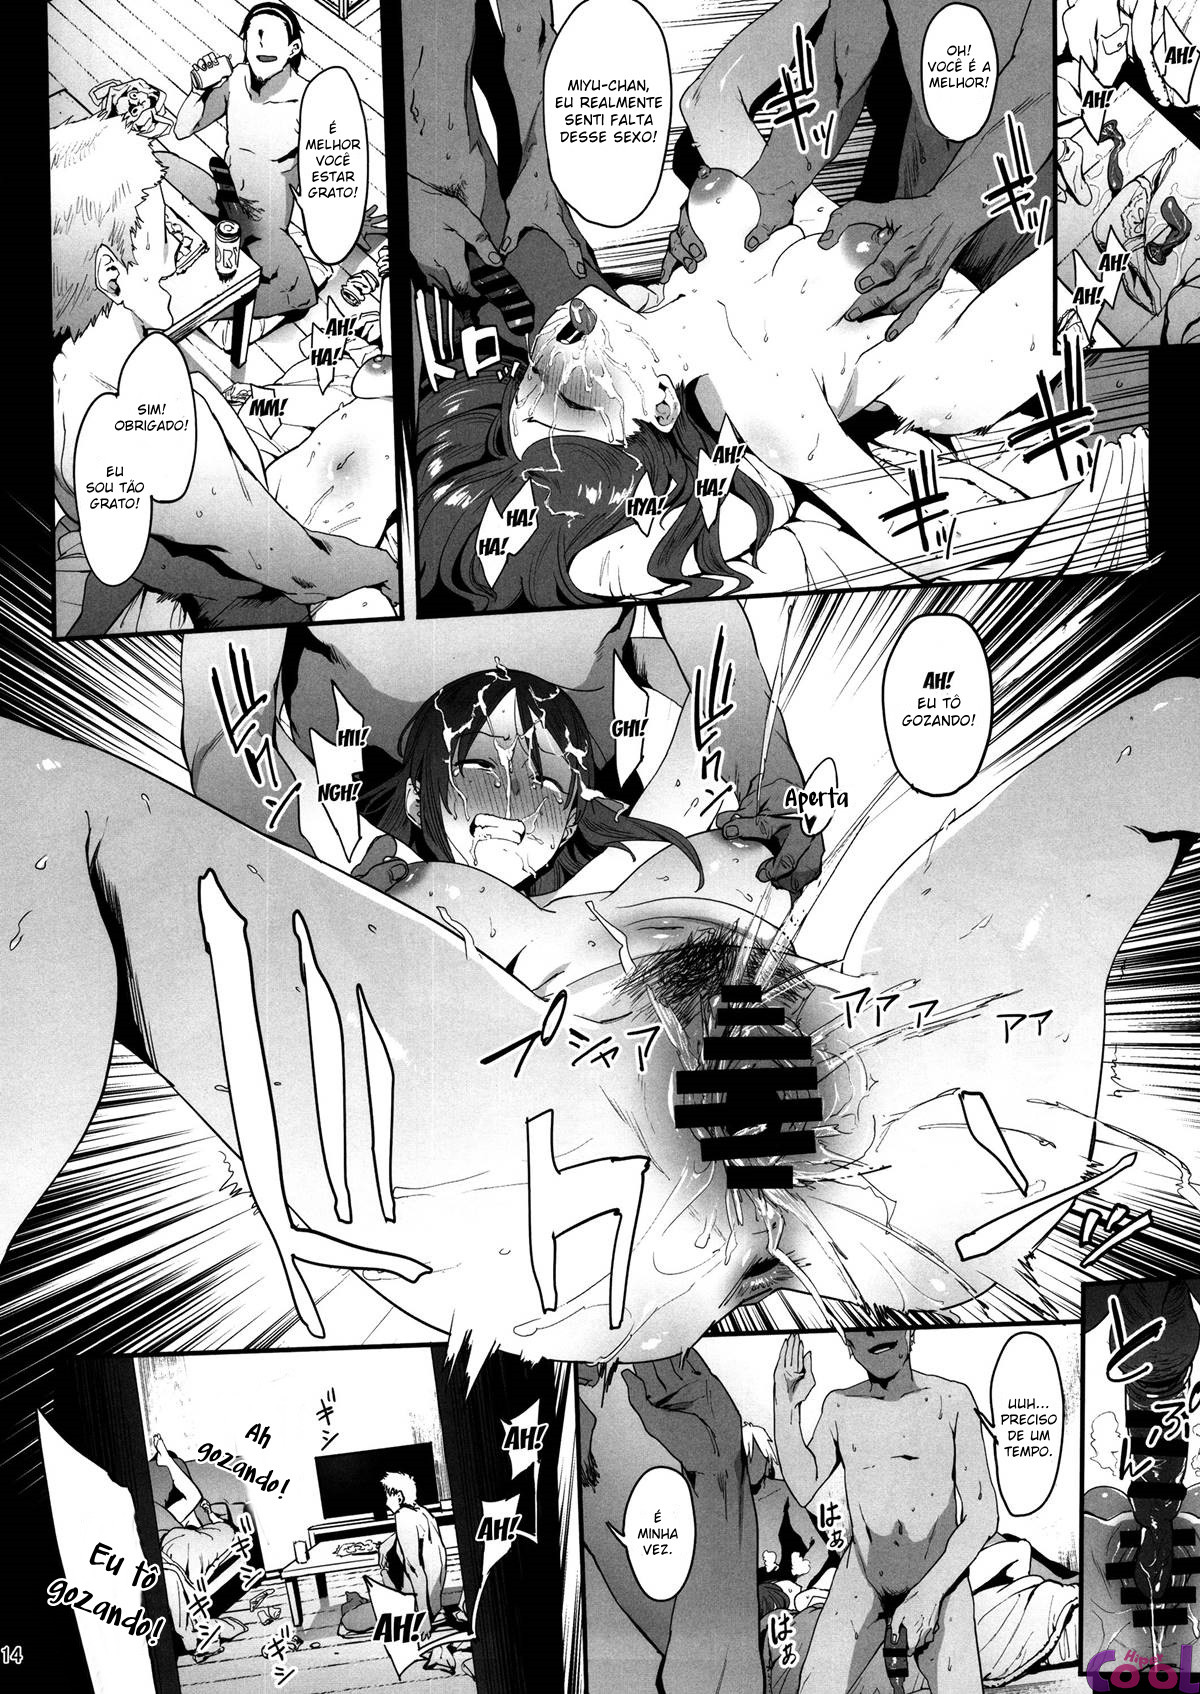 mifune-miyu-no-koukai-chapter-01-page-13.jpg